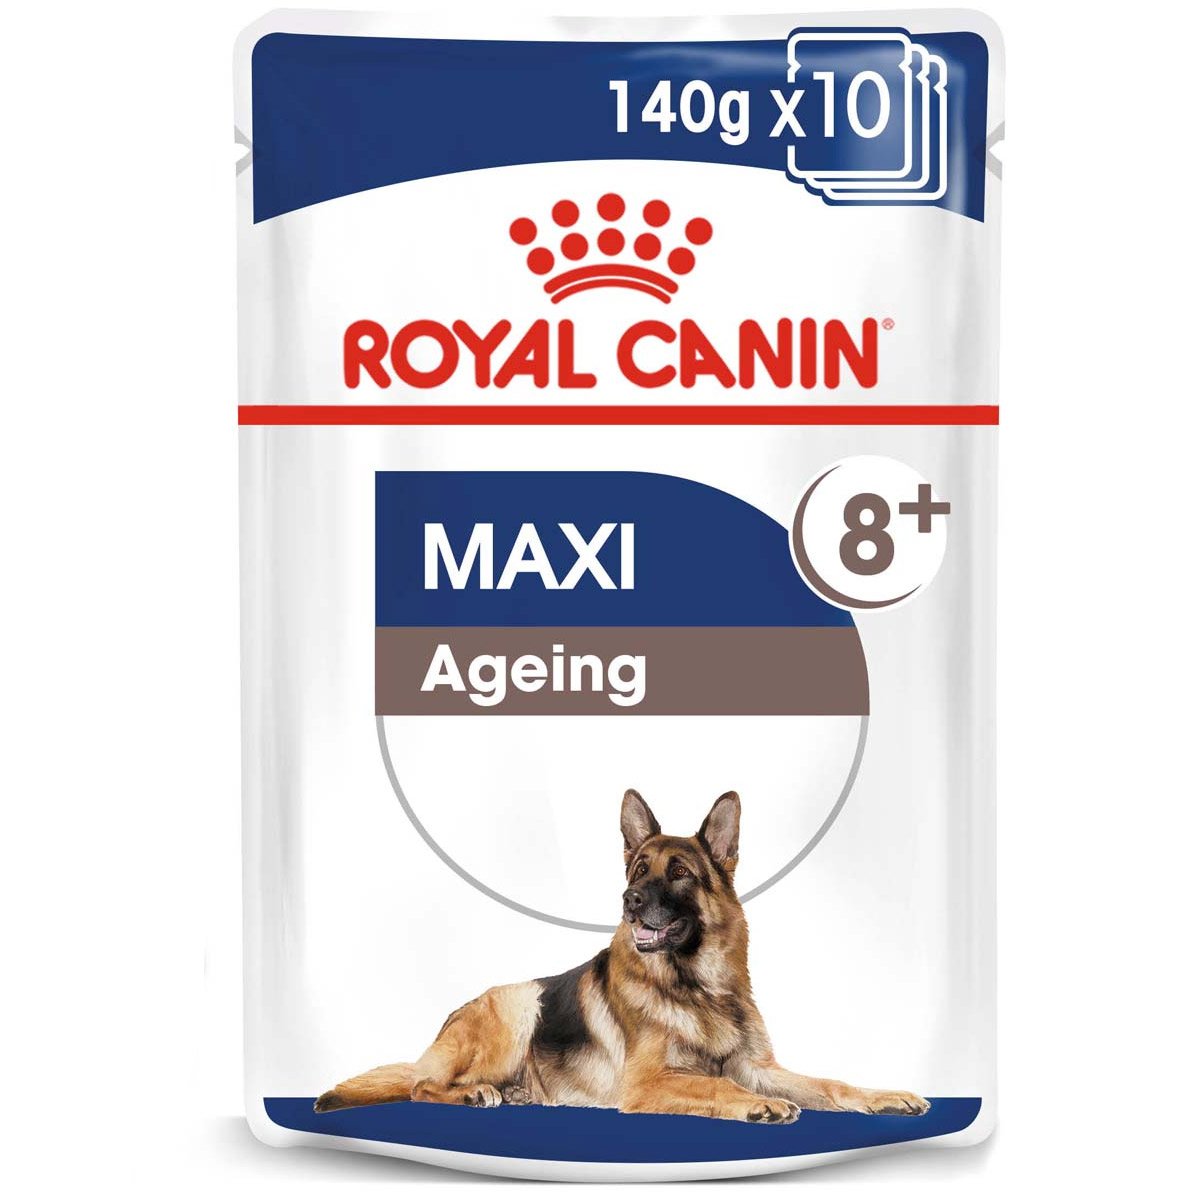 ROYAL CANIN MAXI Ageing 8+ Nassfutter für ältere große Hunde 20x140g von Royal Canin